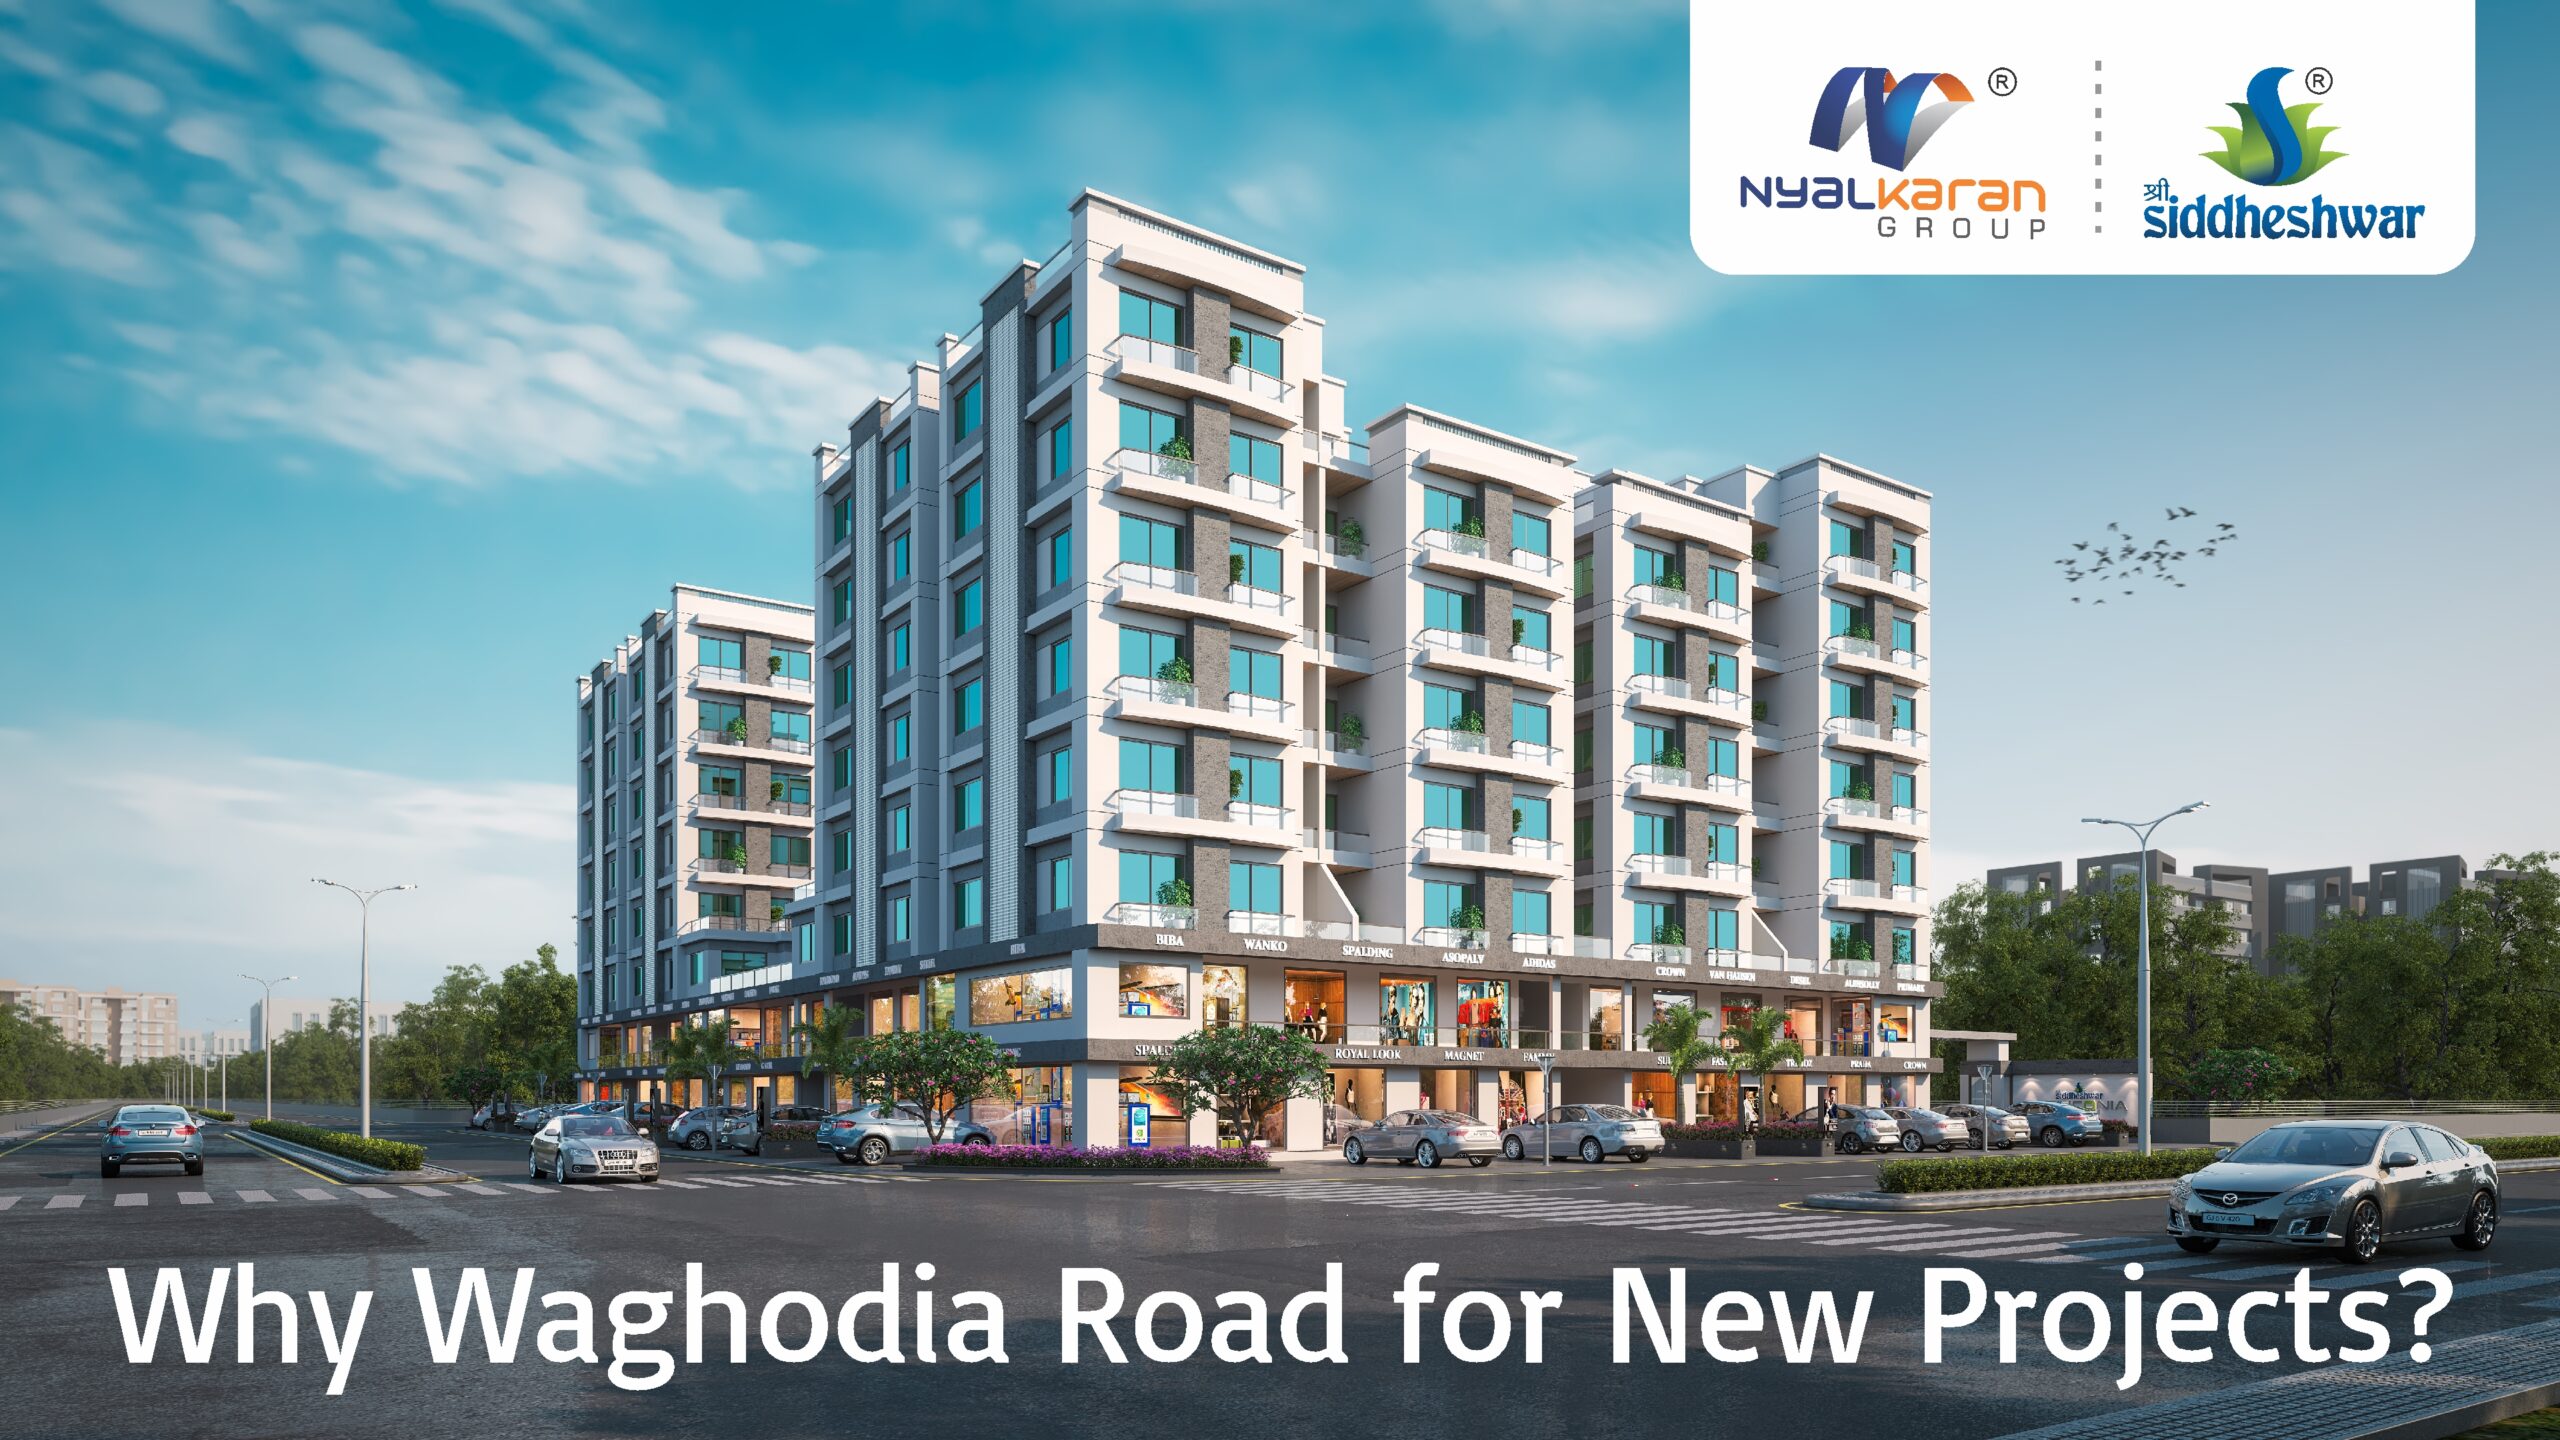 flats in Waghodia Road, Vadodara - Nyalkaran Group